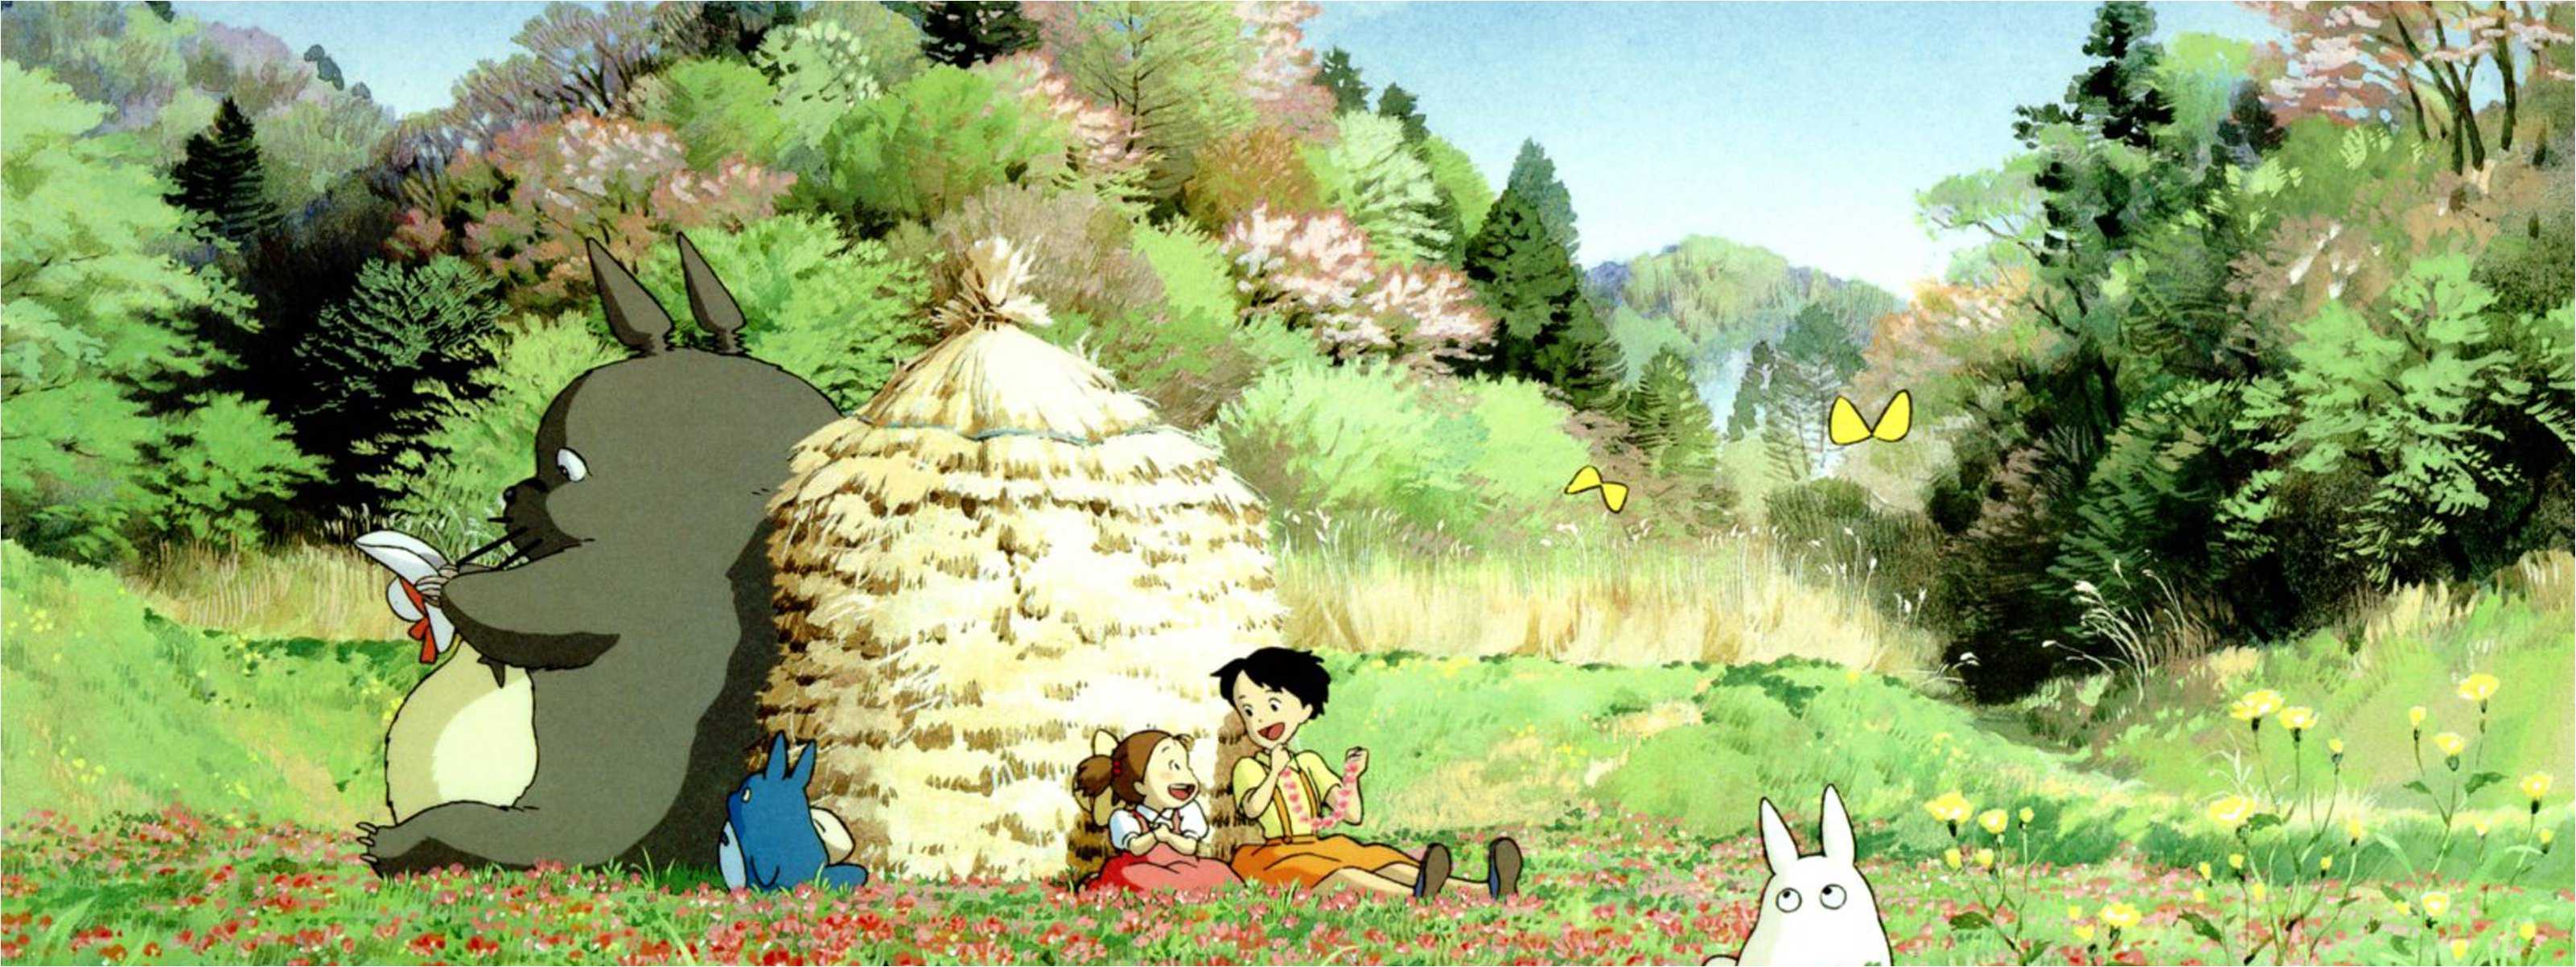 Download In Original Resolution Ghibli Wallpaper 4k Wallpaper & Background Download